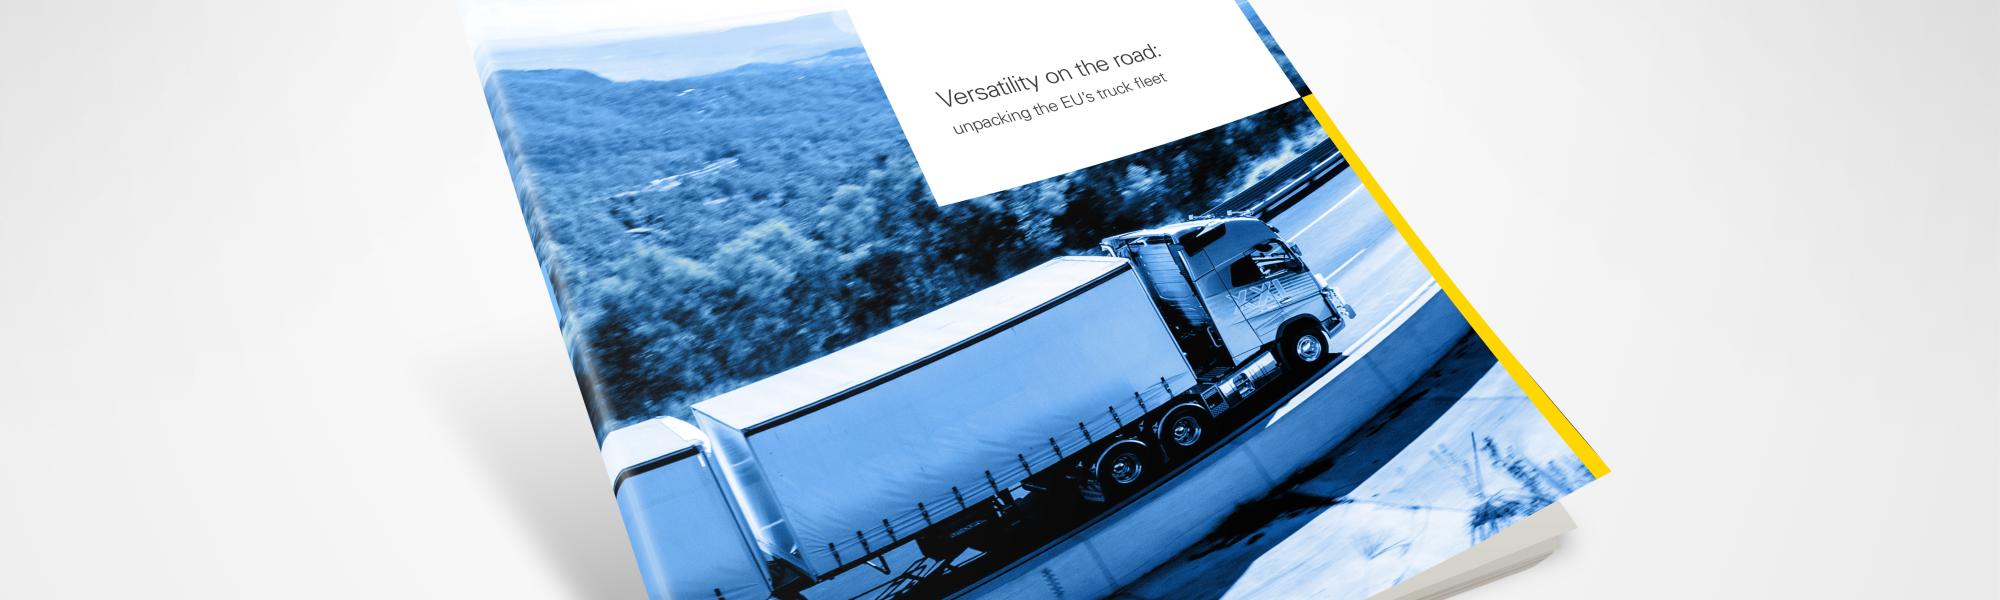 IRU Briefing - Versatility on the road - unpacking the EU’s truck fleet